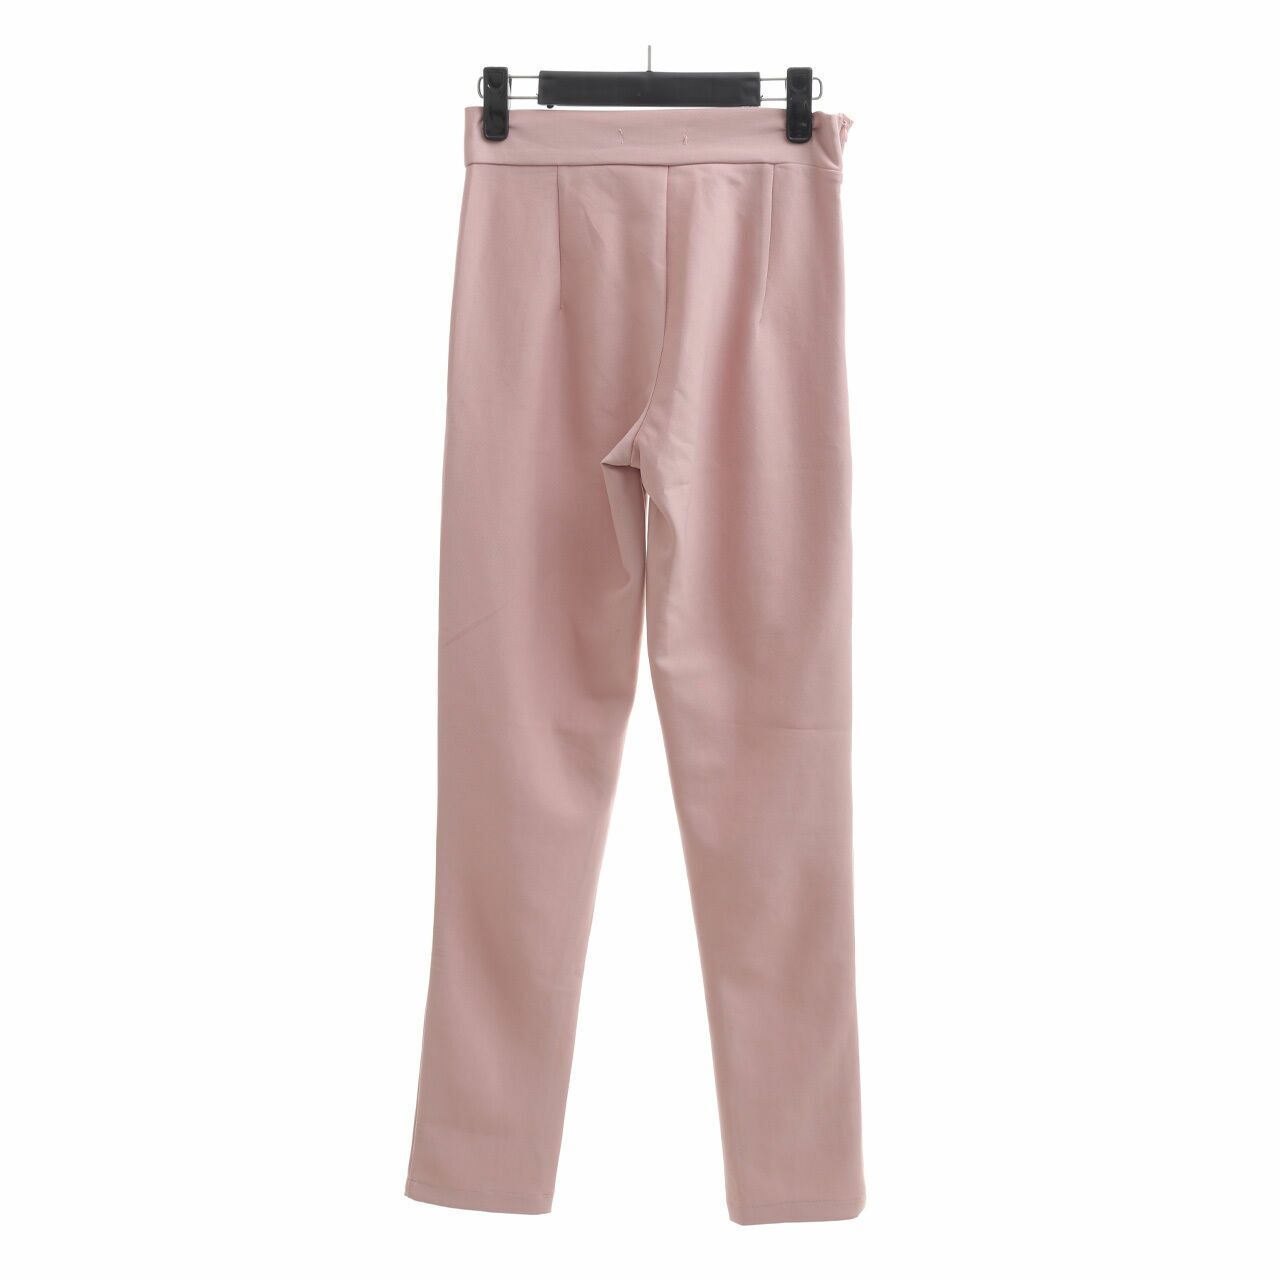 Marie & Frisco Dusty Pink Long Pants